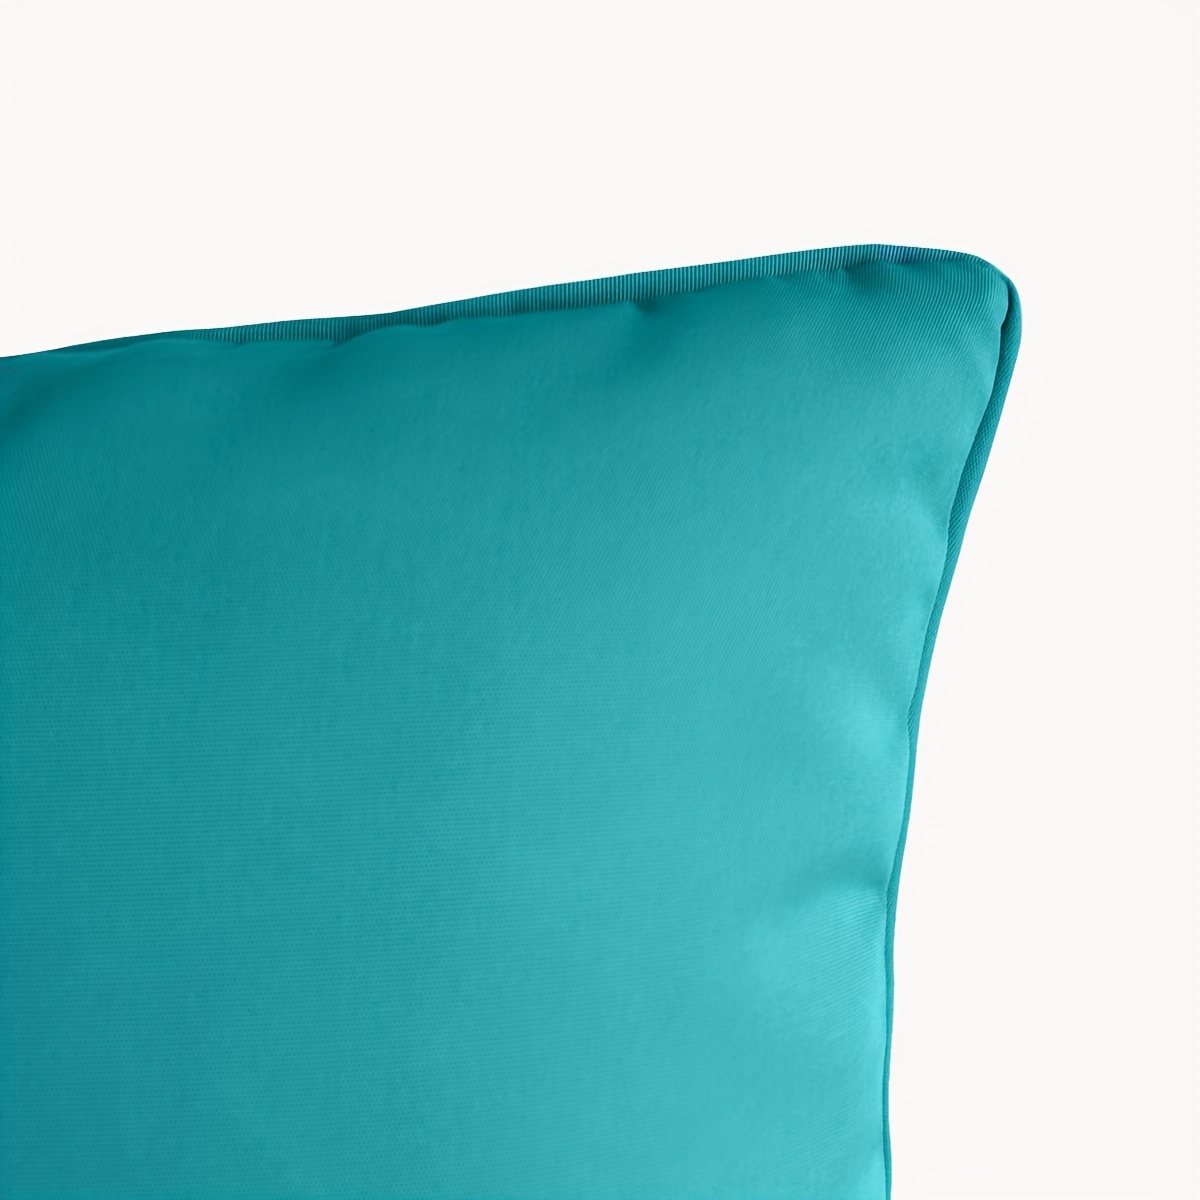 18 in. x 18 in. Green Outdoor Waterproof Throw Pillow Covers